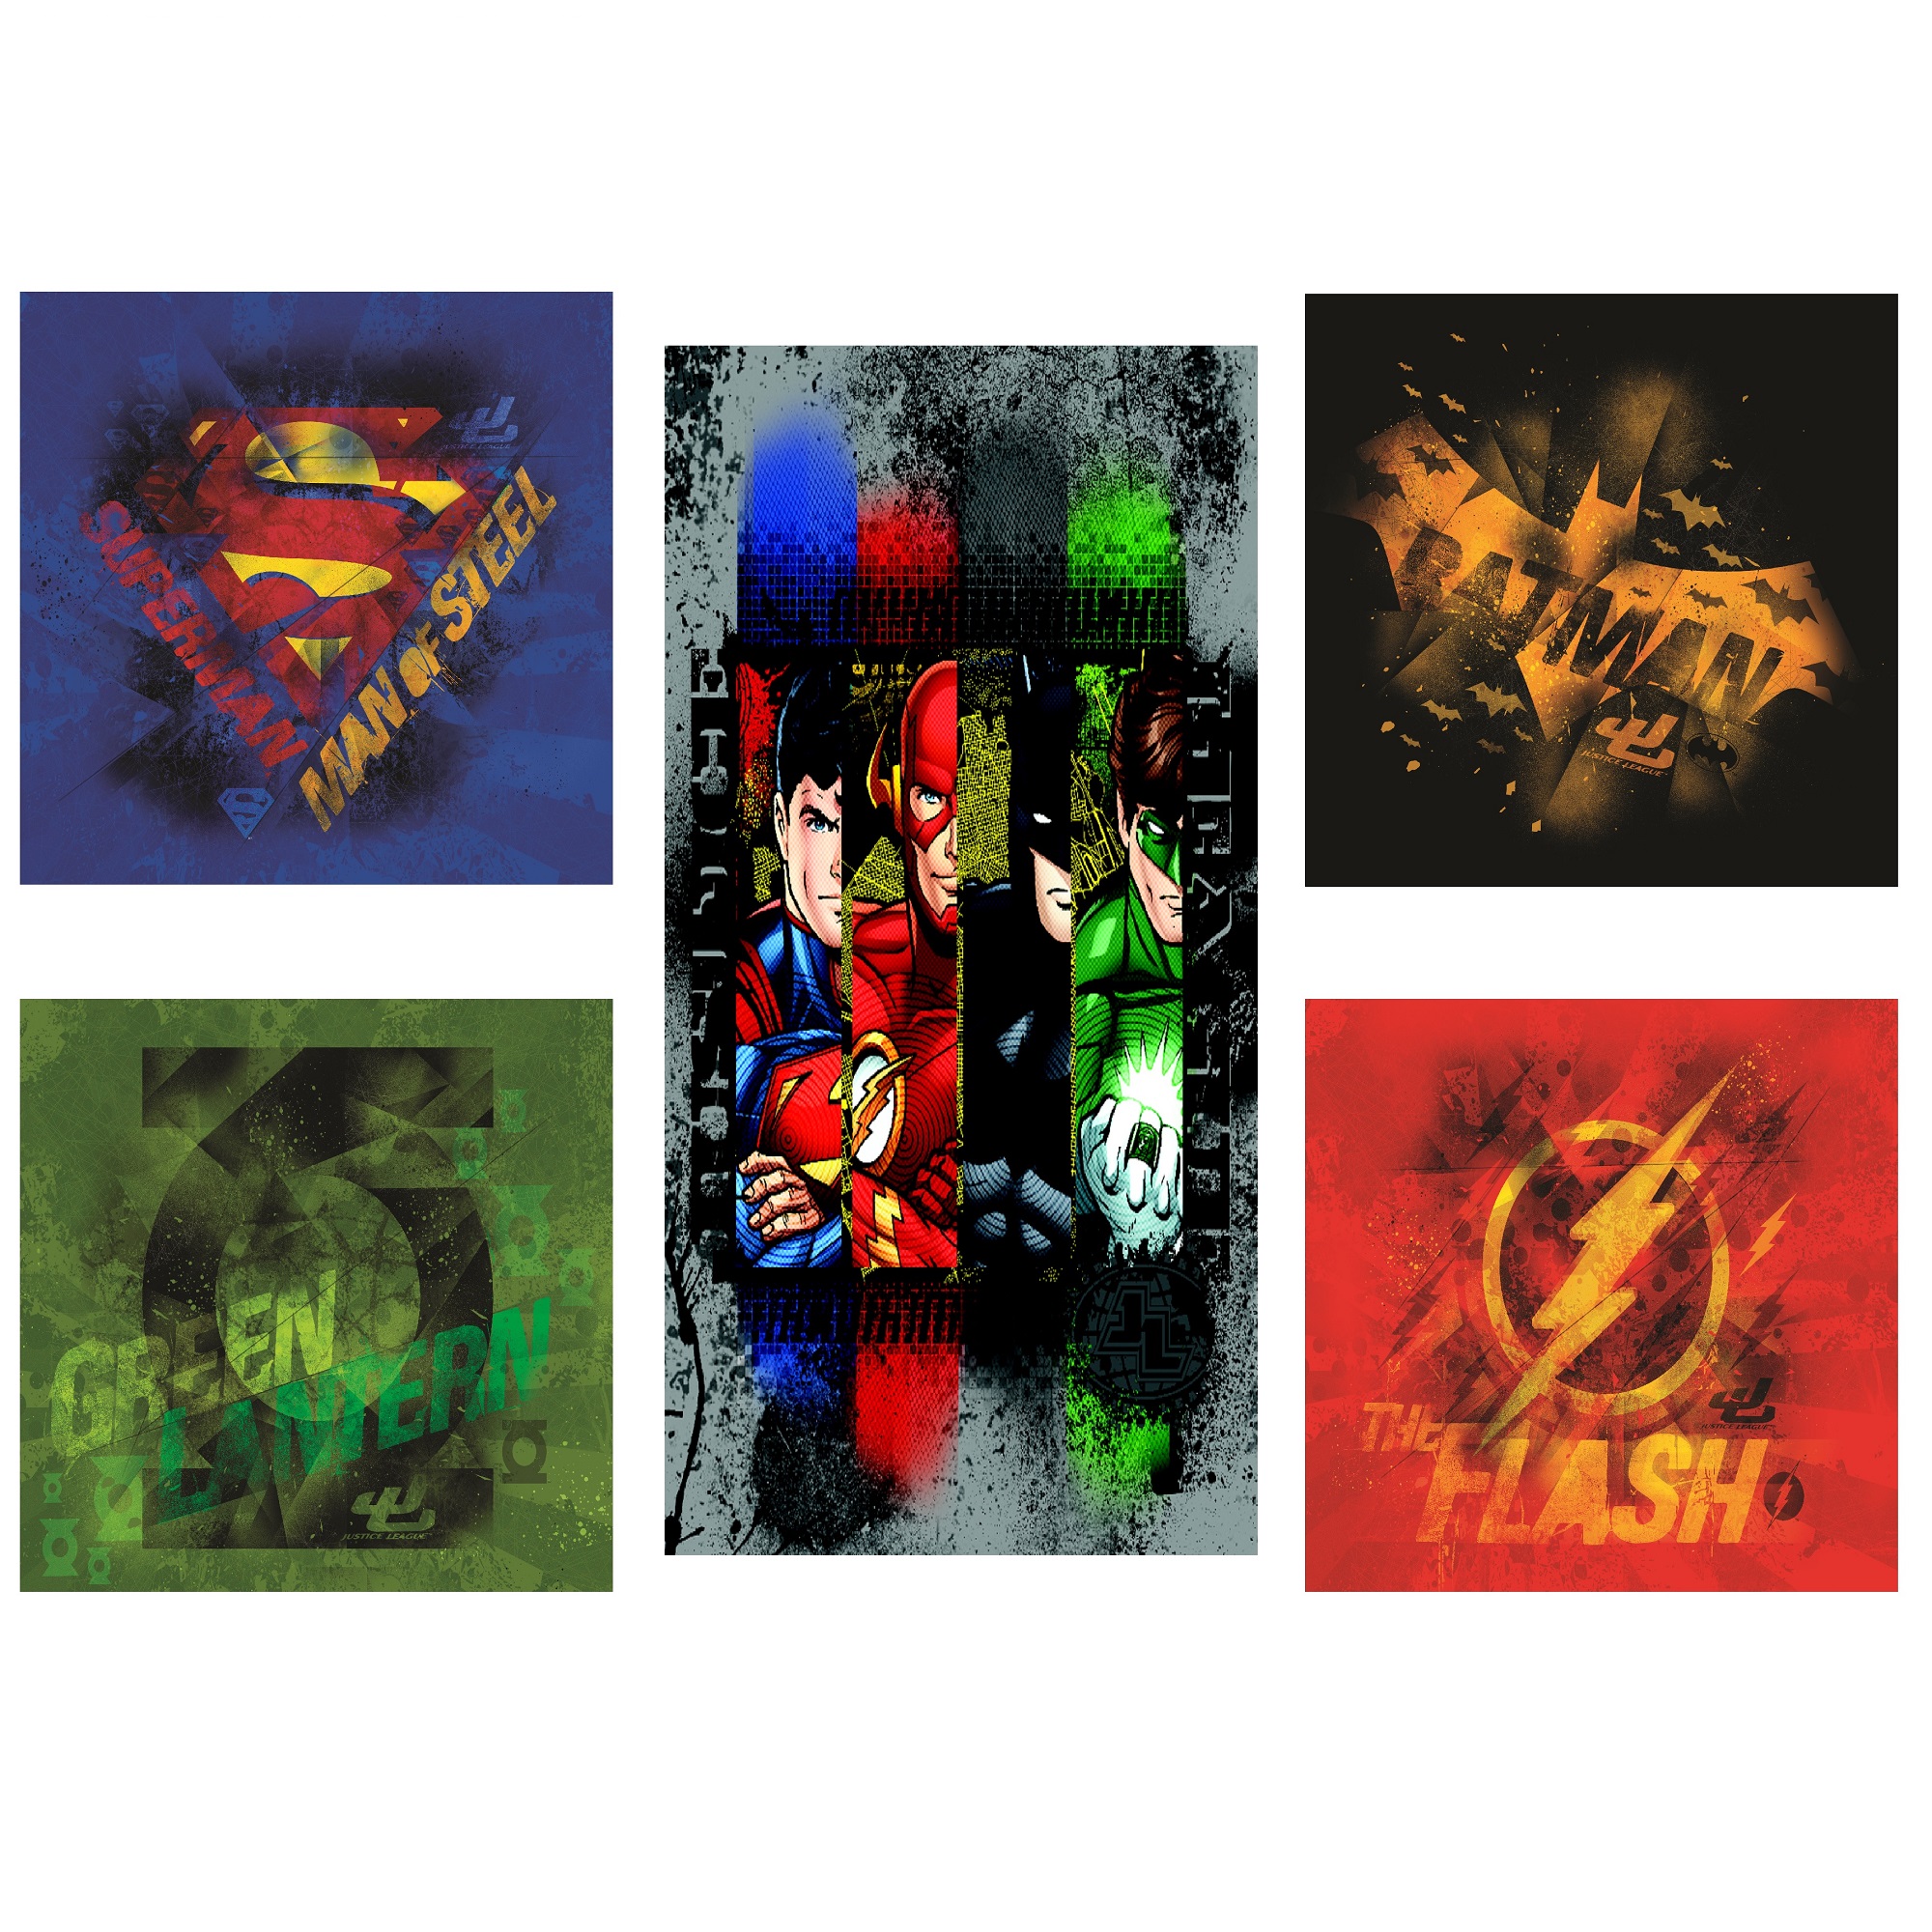 Justice League 5 Piece Canvas Wall Art Set Featuring Superhero Character Designs of Superman, Batman, Green Lantern and Flash Gordon, Multicolored - image 1 of 6